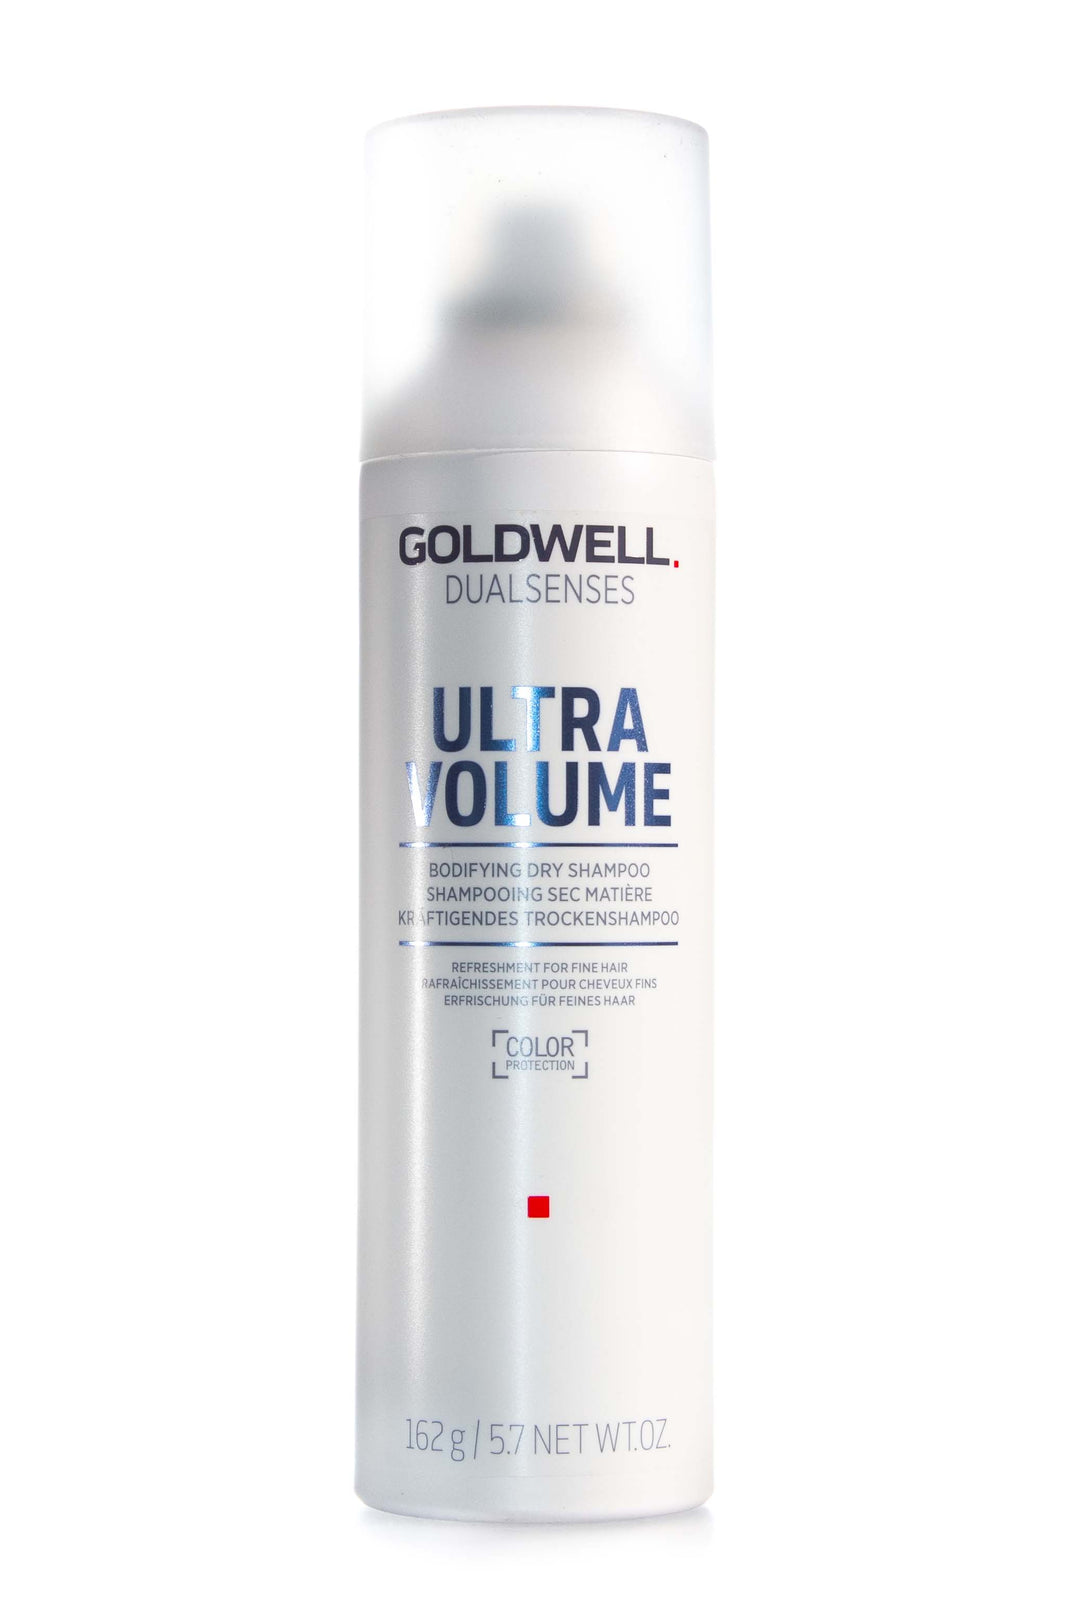 GOLDWELL Dual Senses Ultra Volume Bodifying Dry Shampoo | 162g